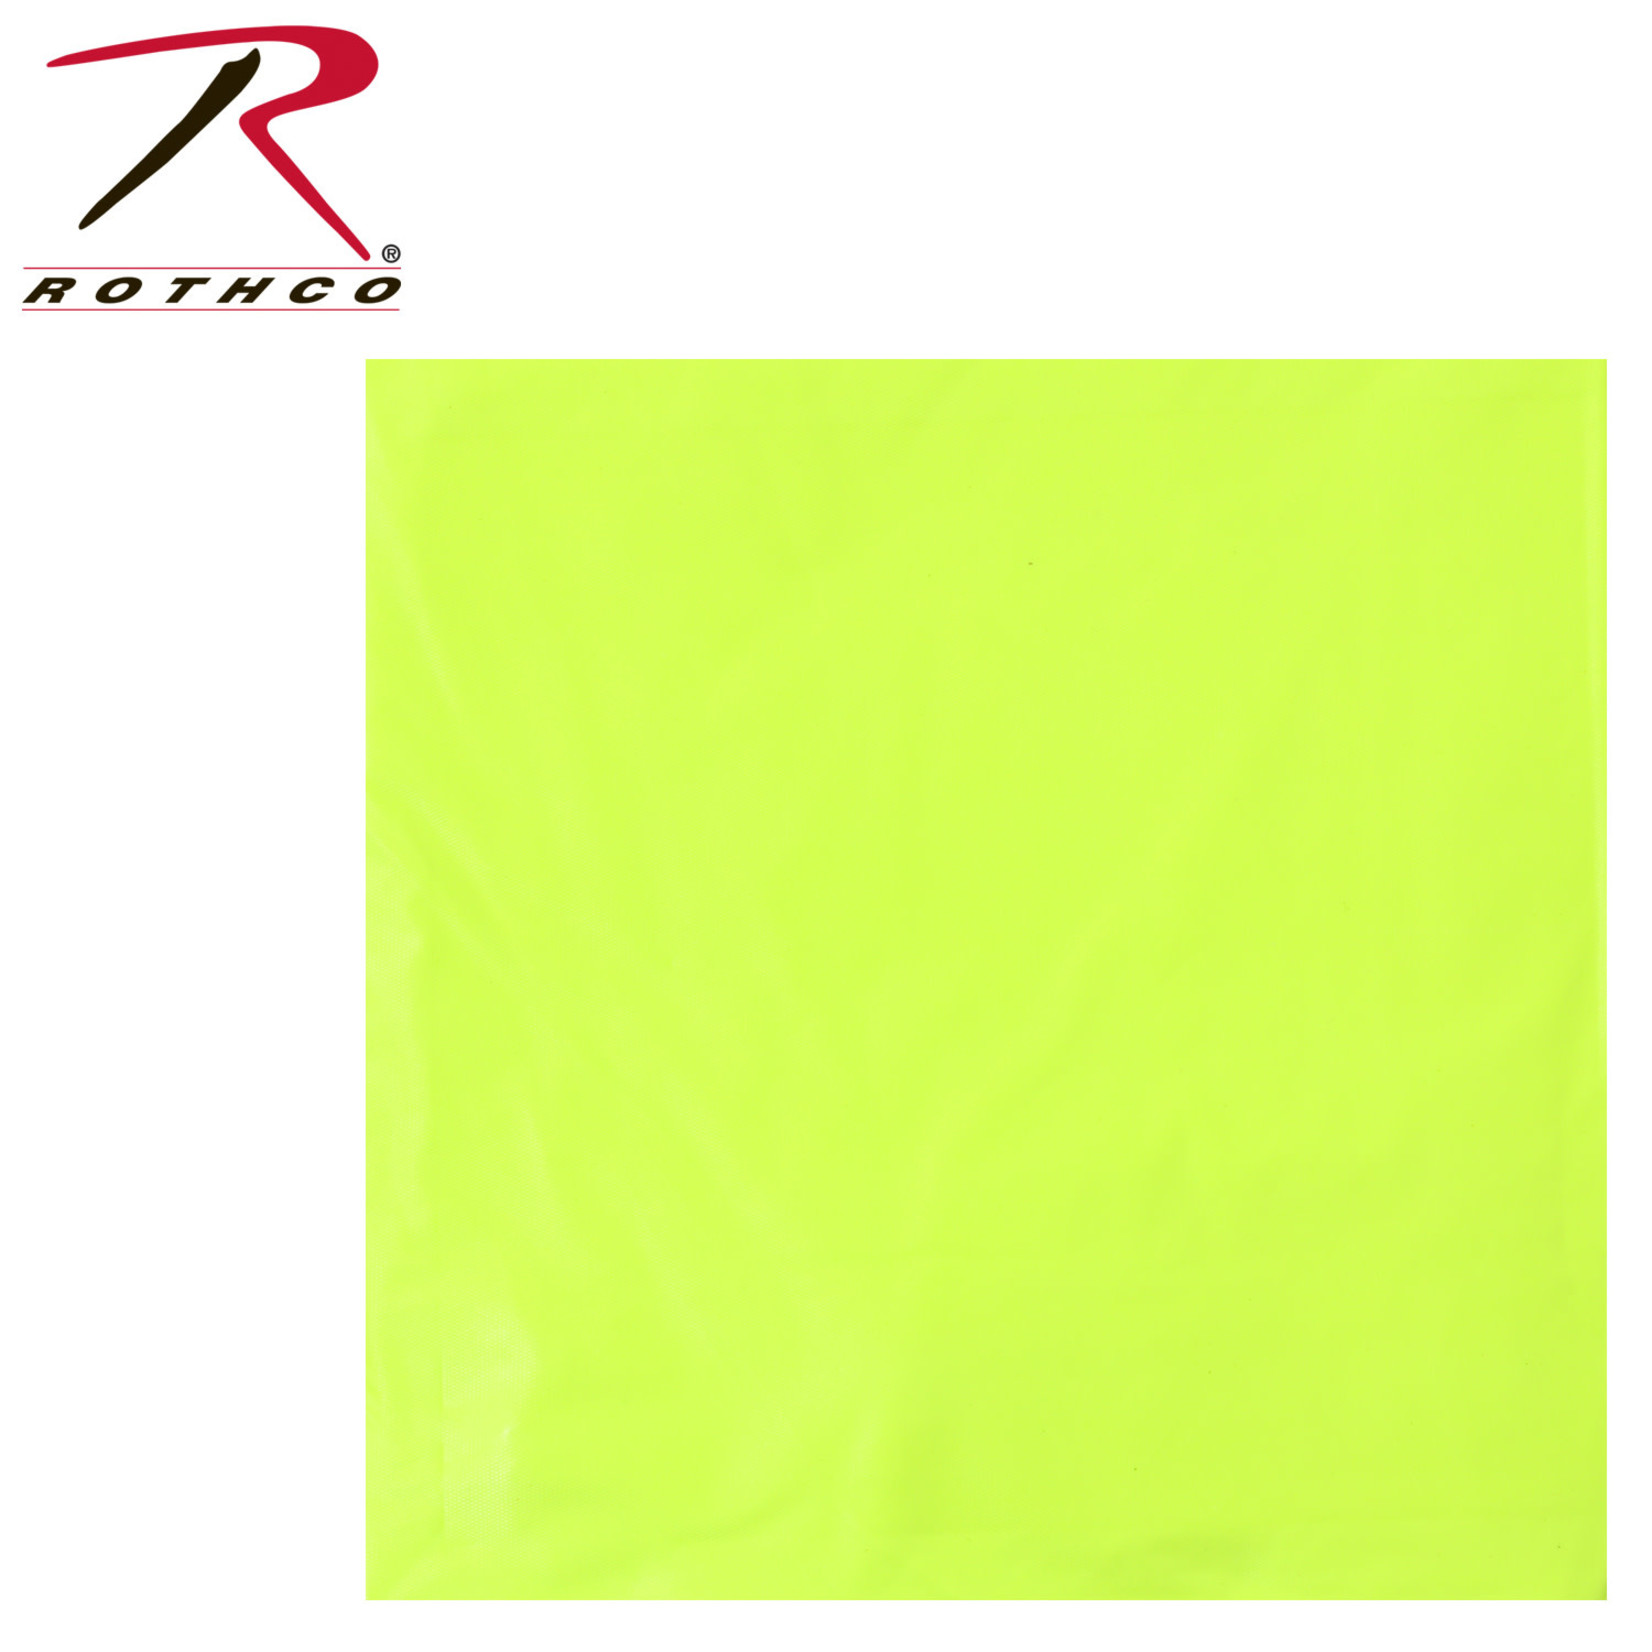 Rothco Rothco 4-Way Vinyl Poncho - Neon Green